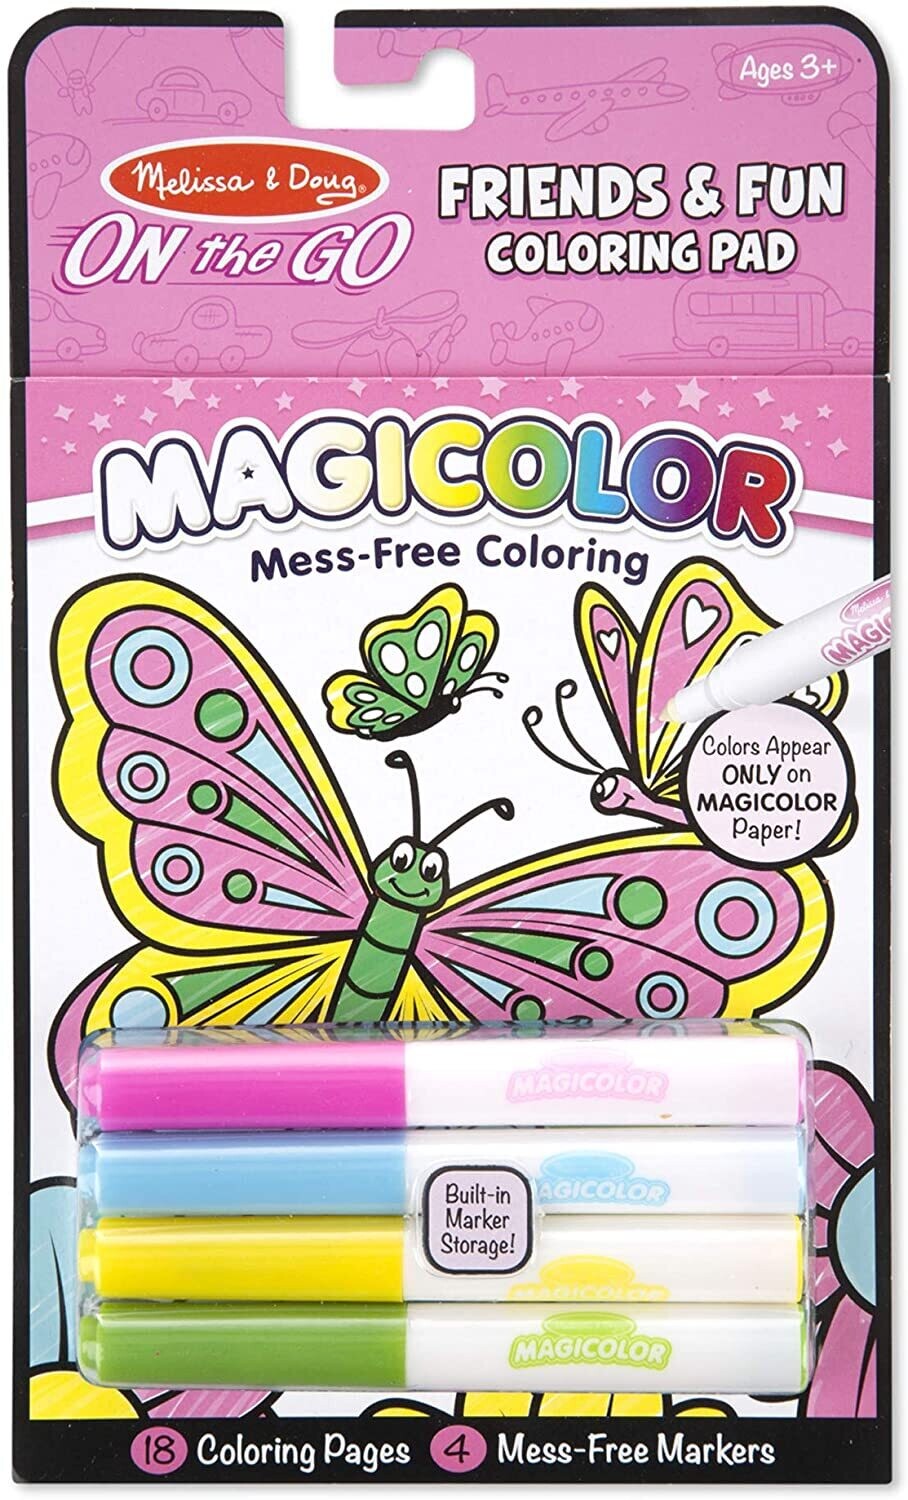 MD 9134 Magicolor Coloring Pad - Friendship and Fun